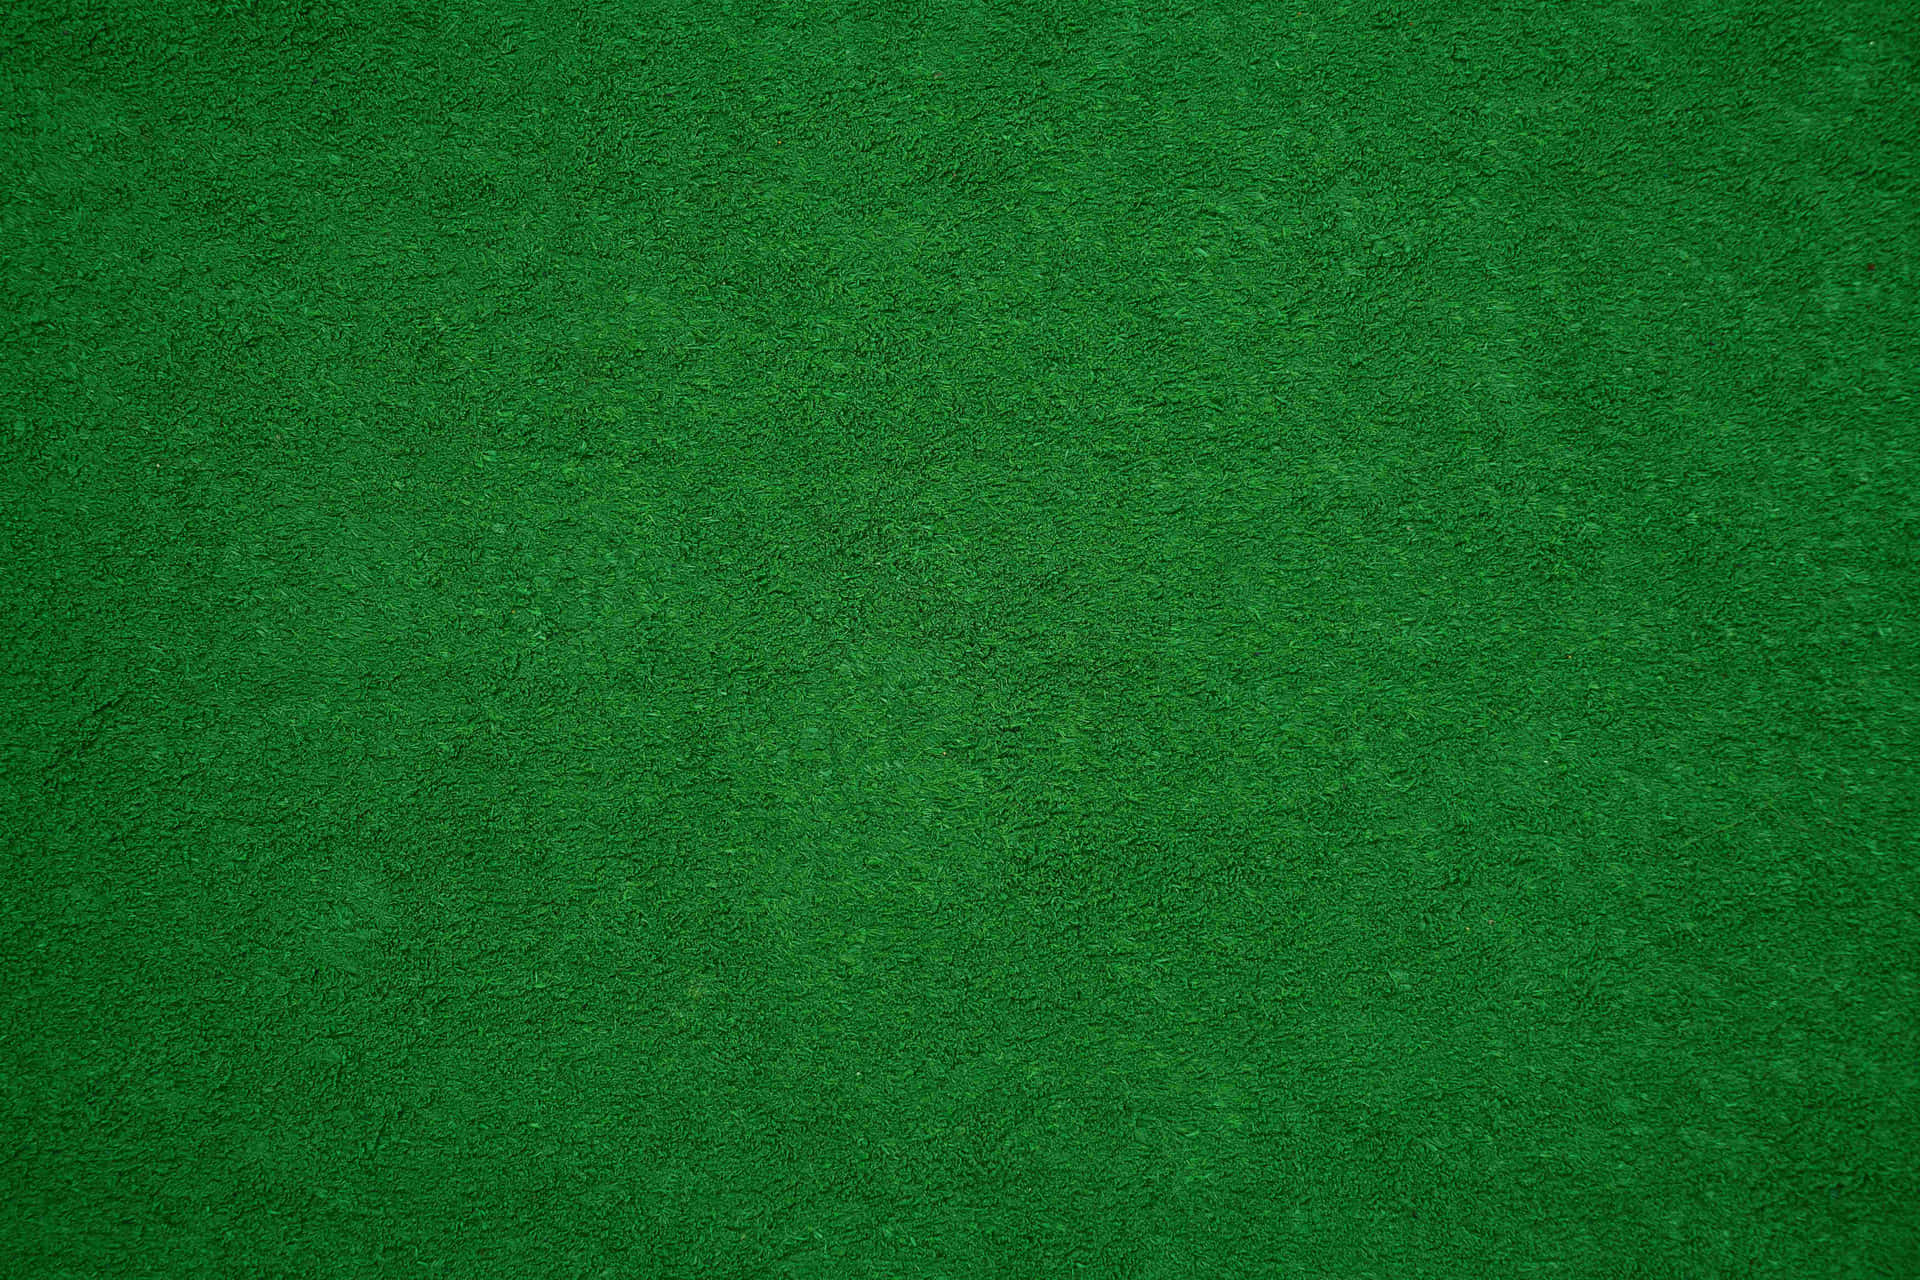 Simple Green Felt Fabric Texture Background